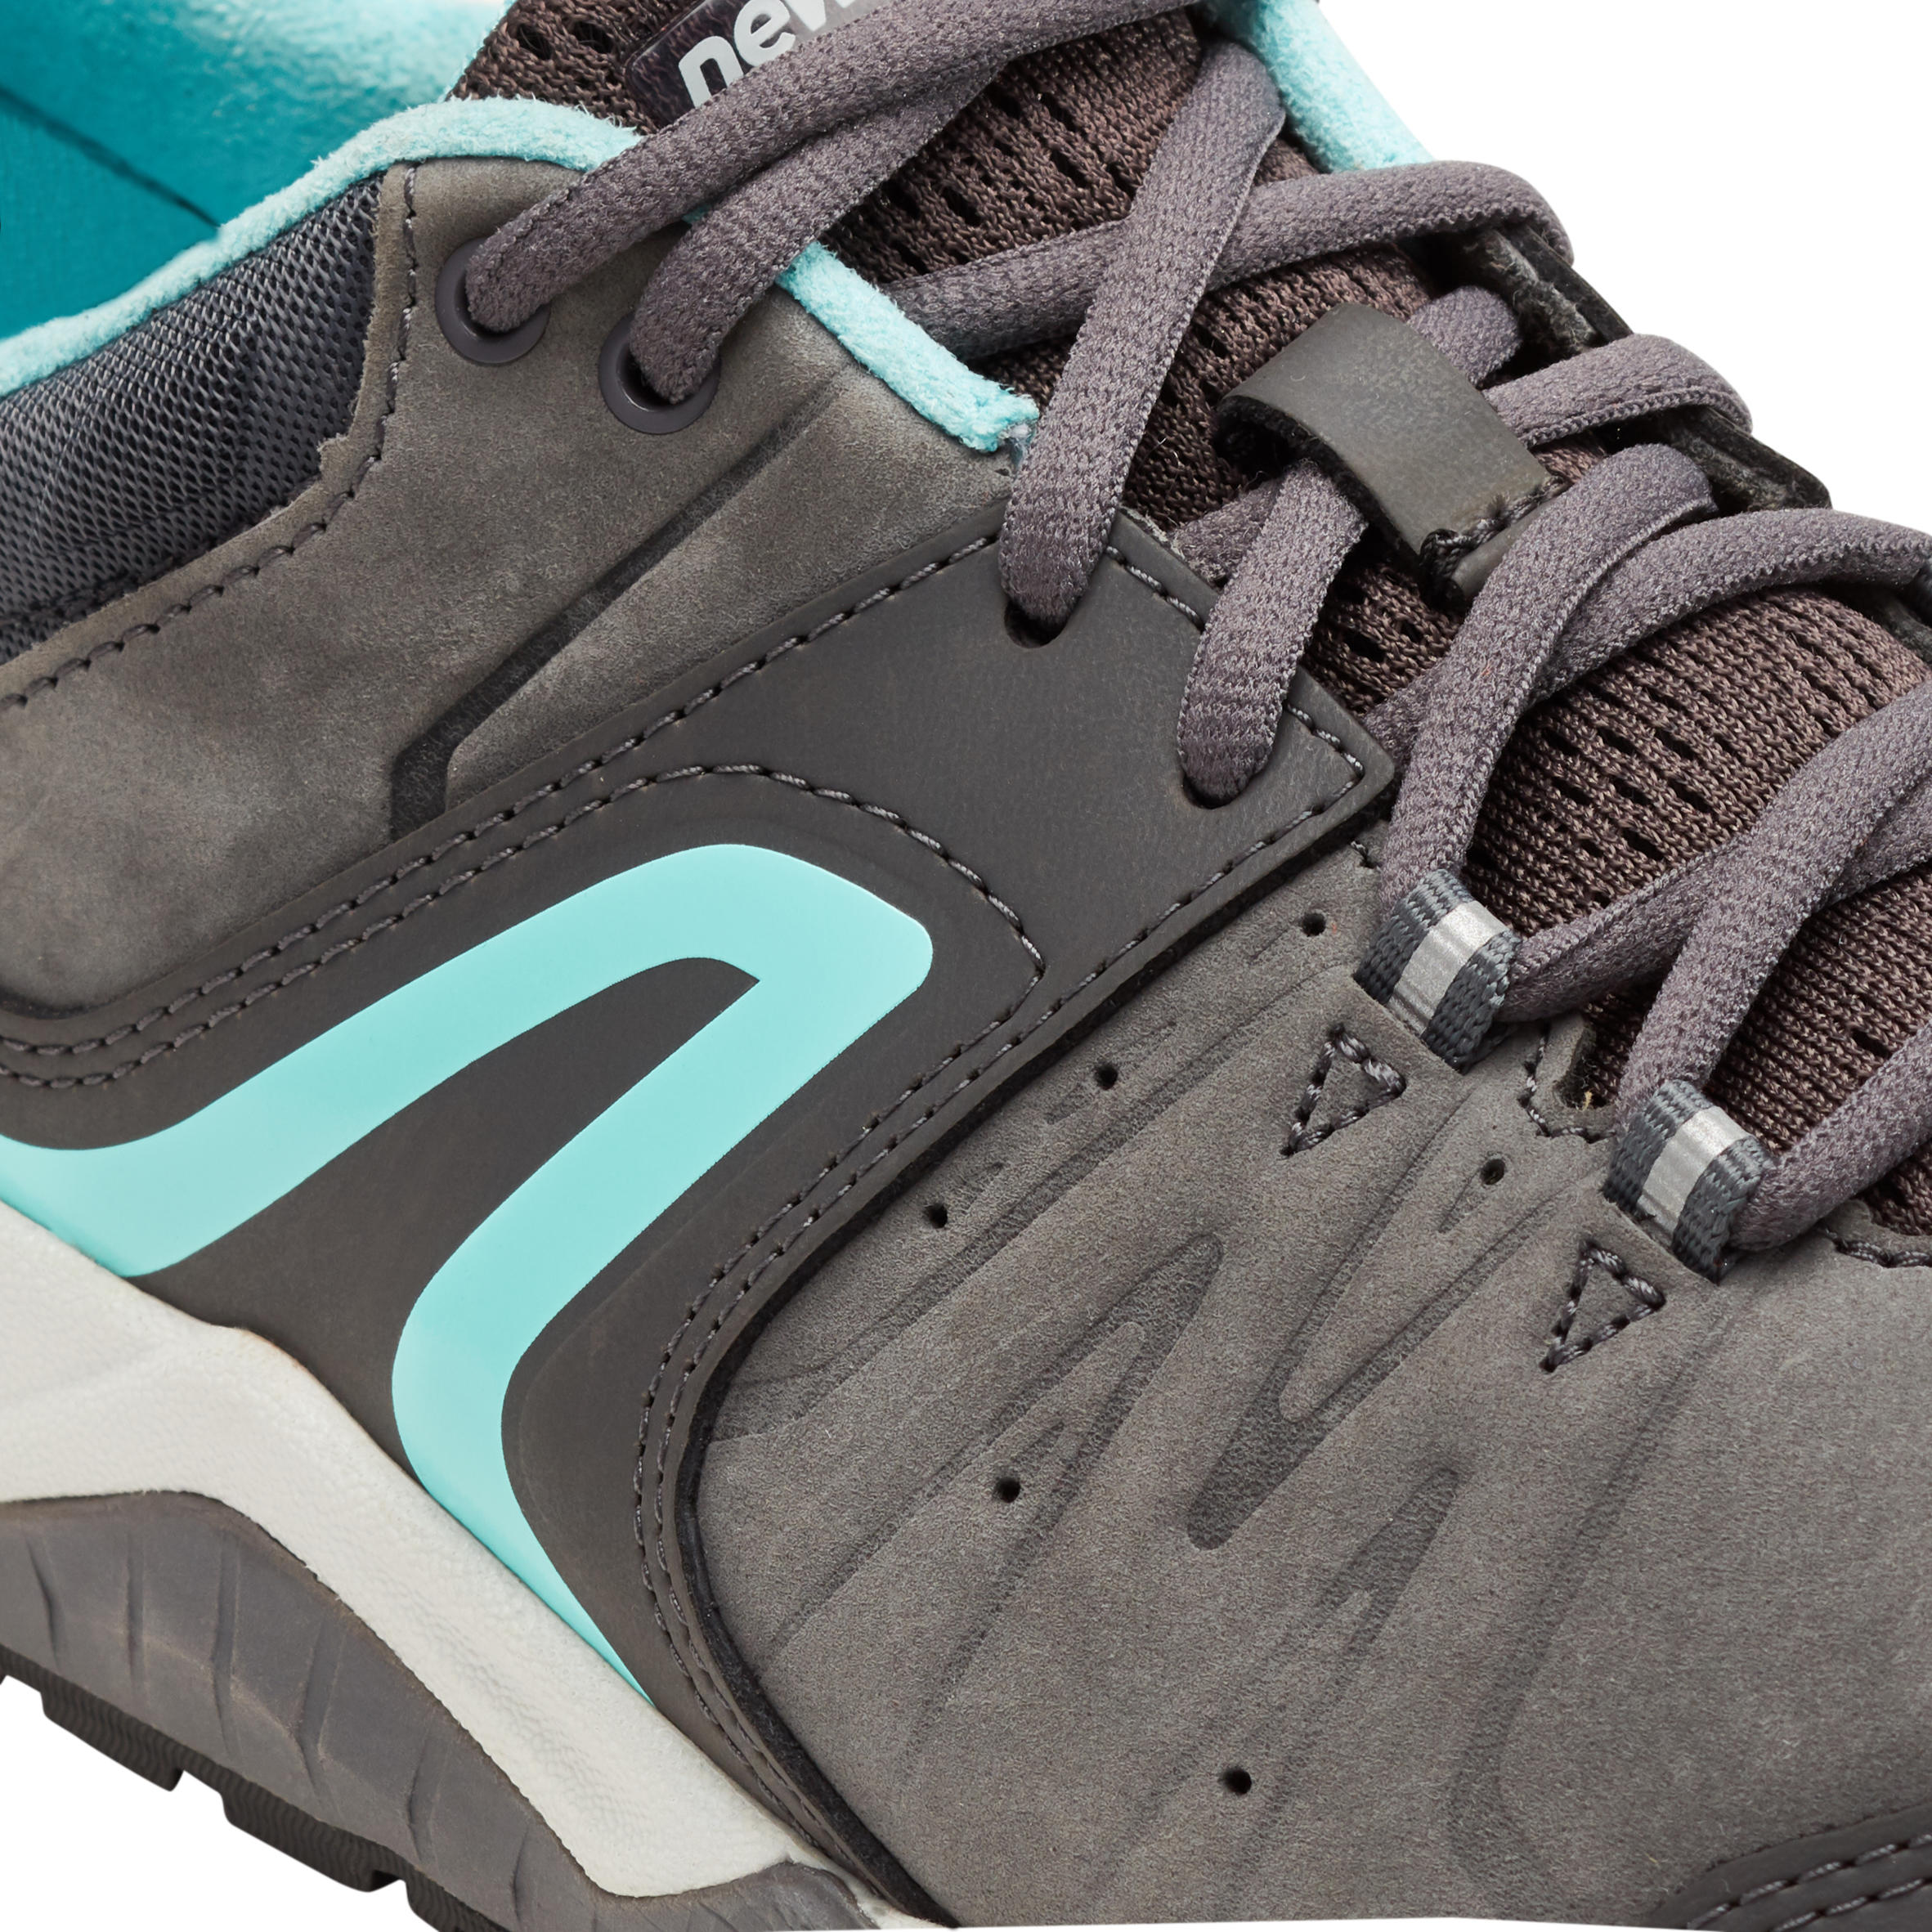 PW 940 Propulse Motion Women's Fitness Walking Shoes leather grey/blue 9/10